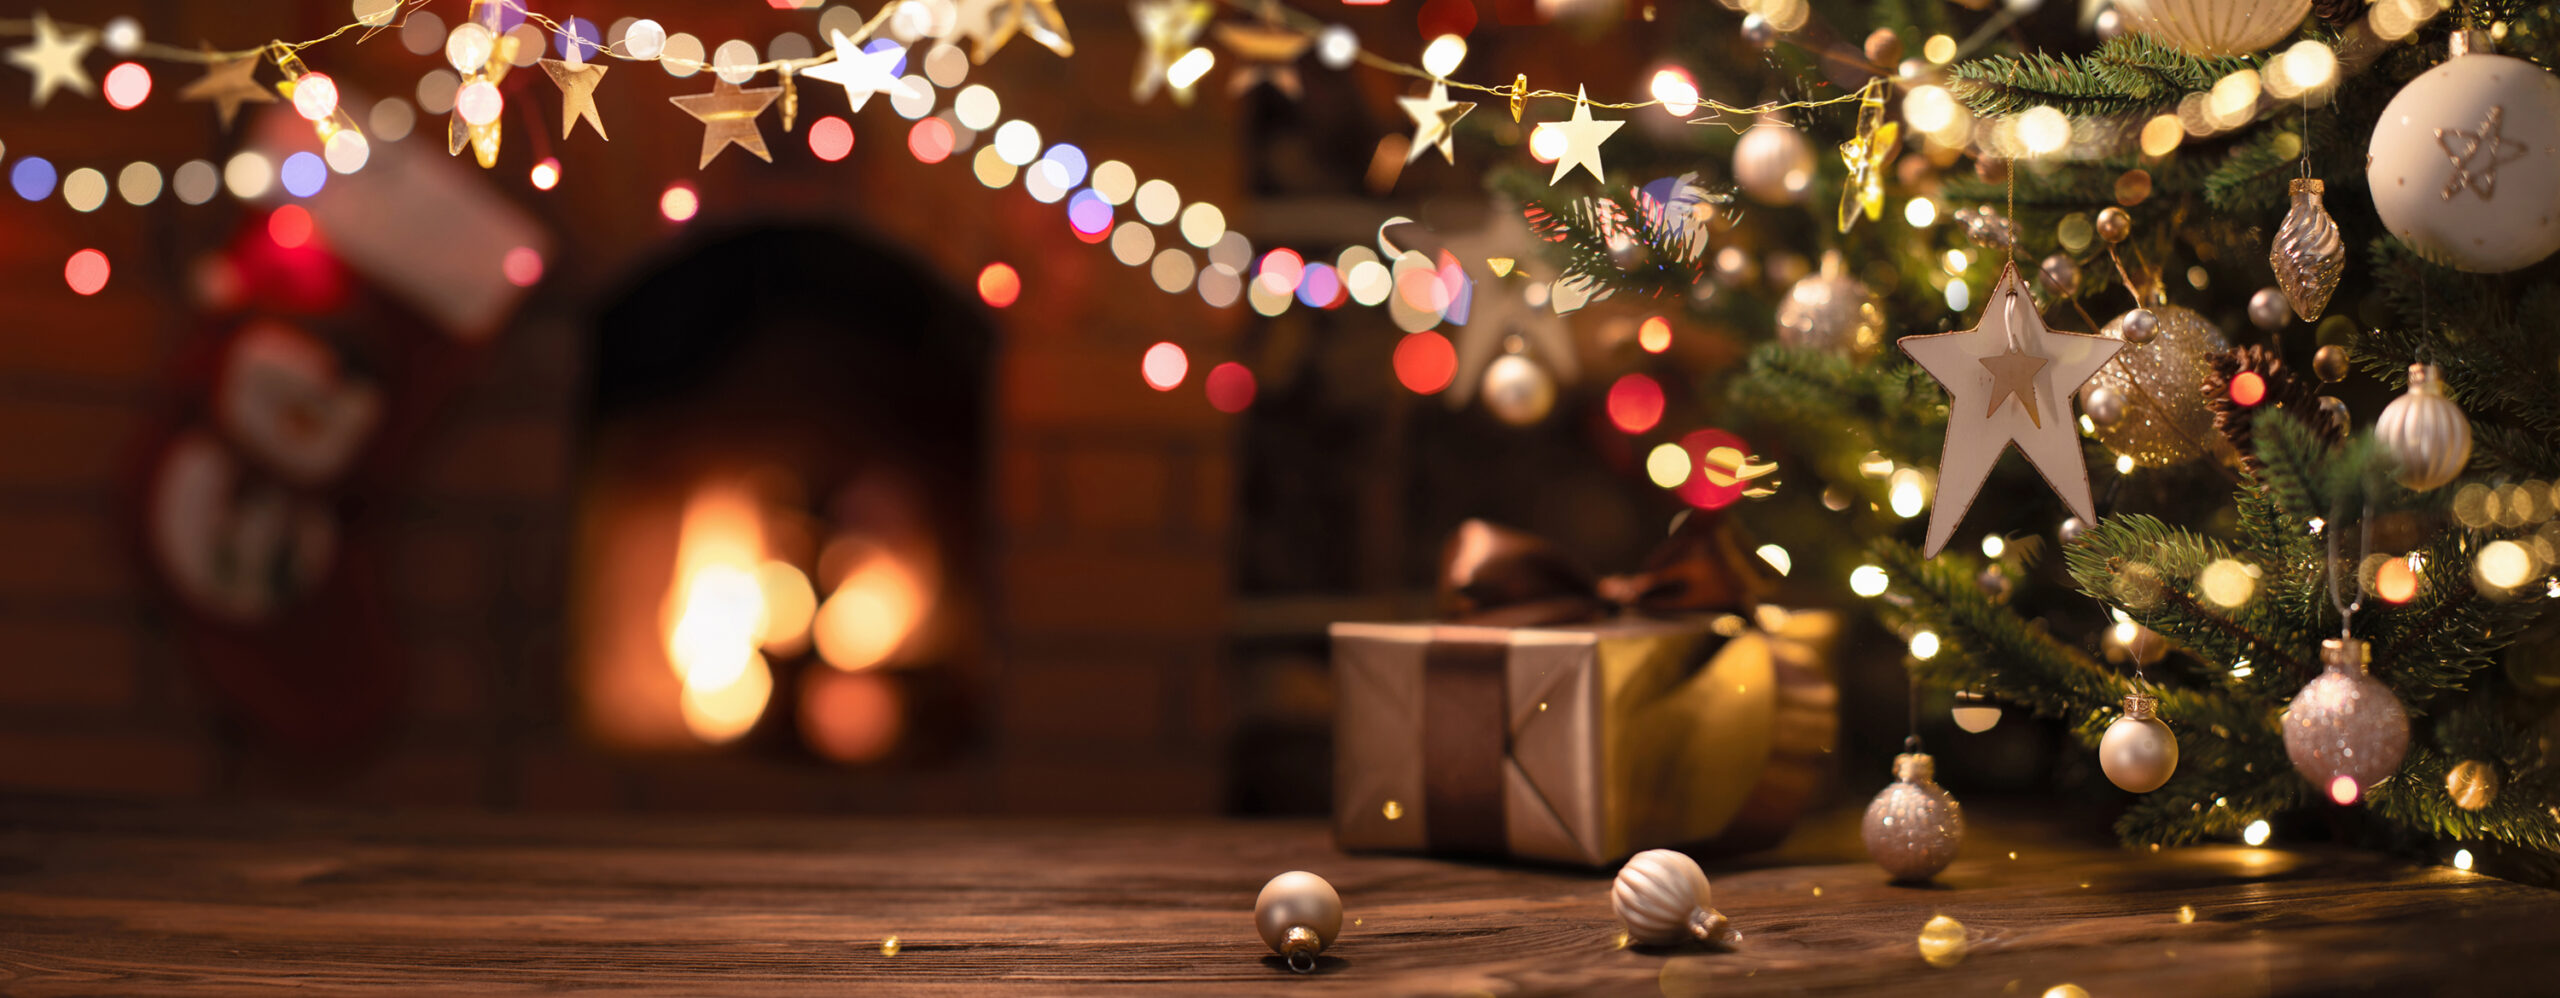 Licensing Lights Up Holiday Season